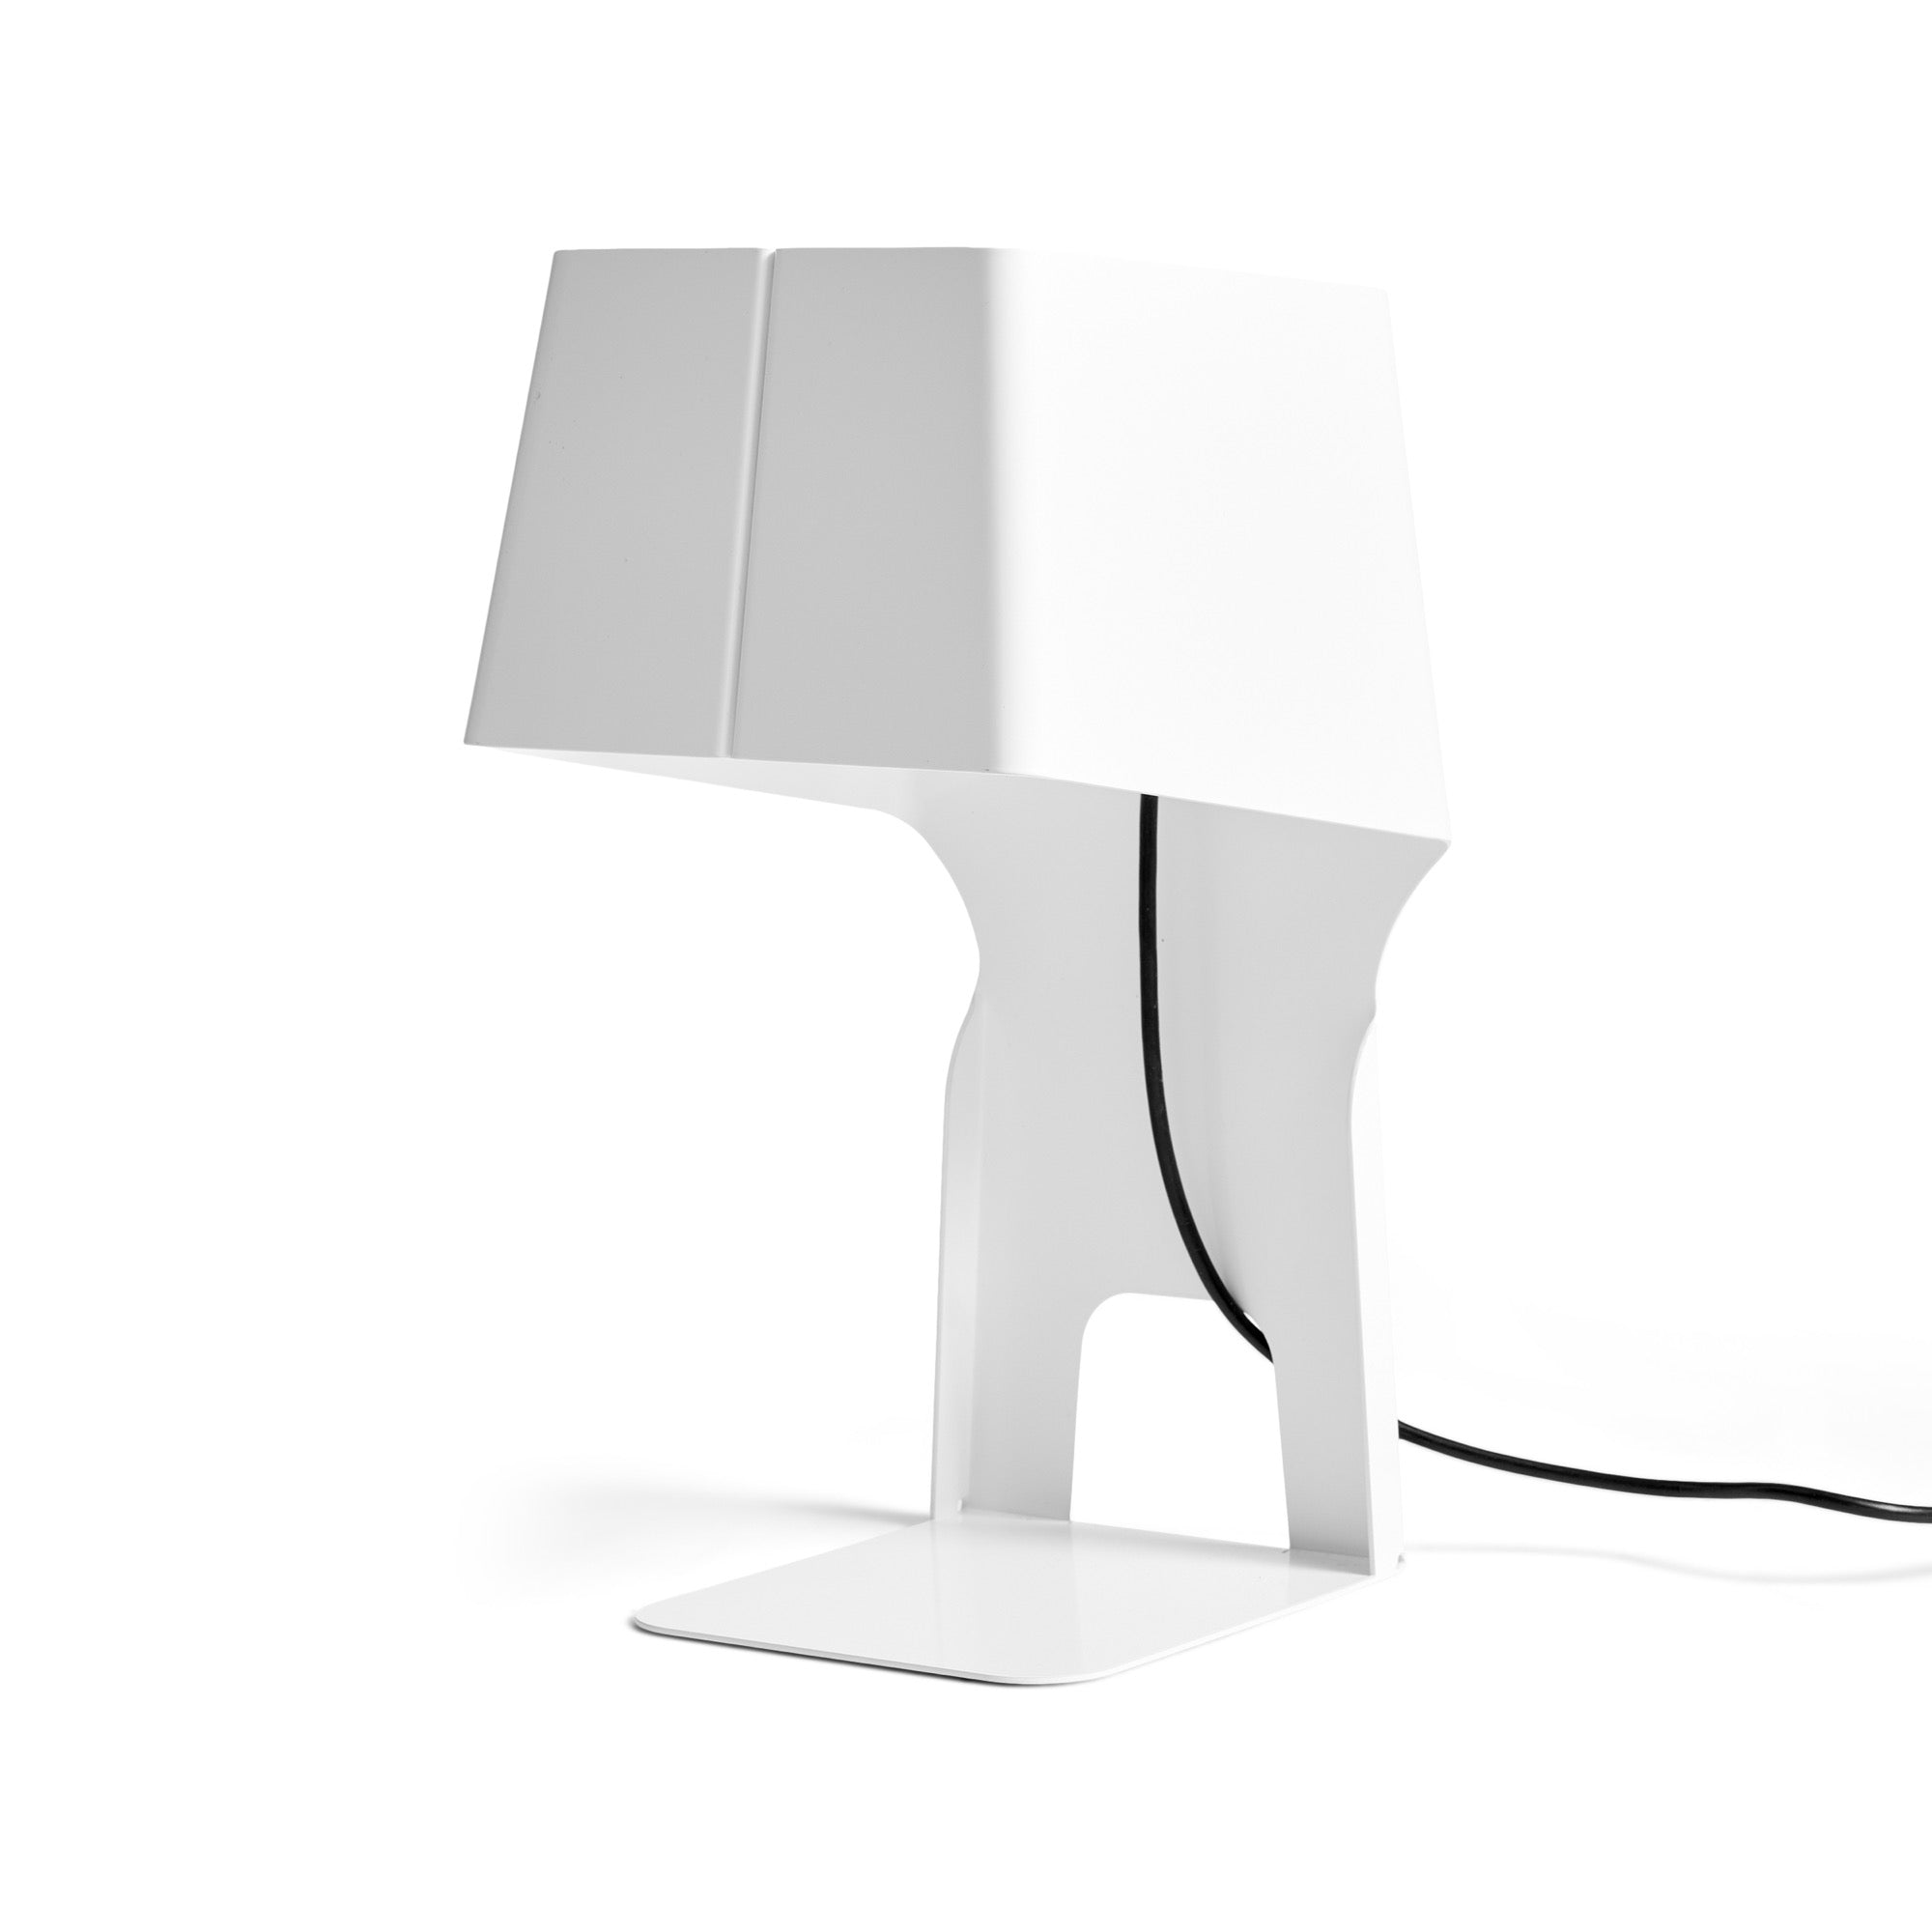 "Leti" Bookend Lamp by Matteo Ragni for Danese Milano